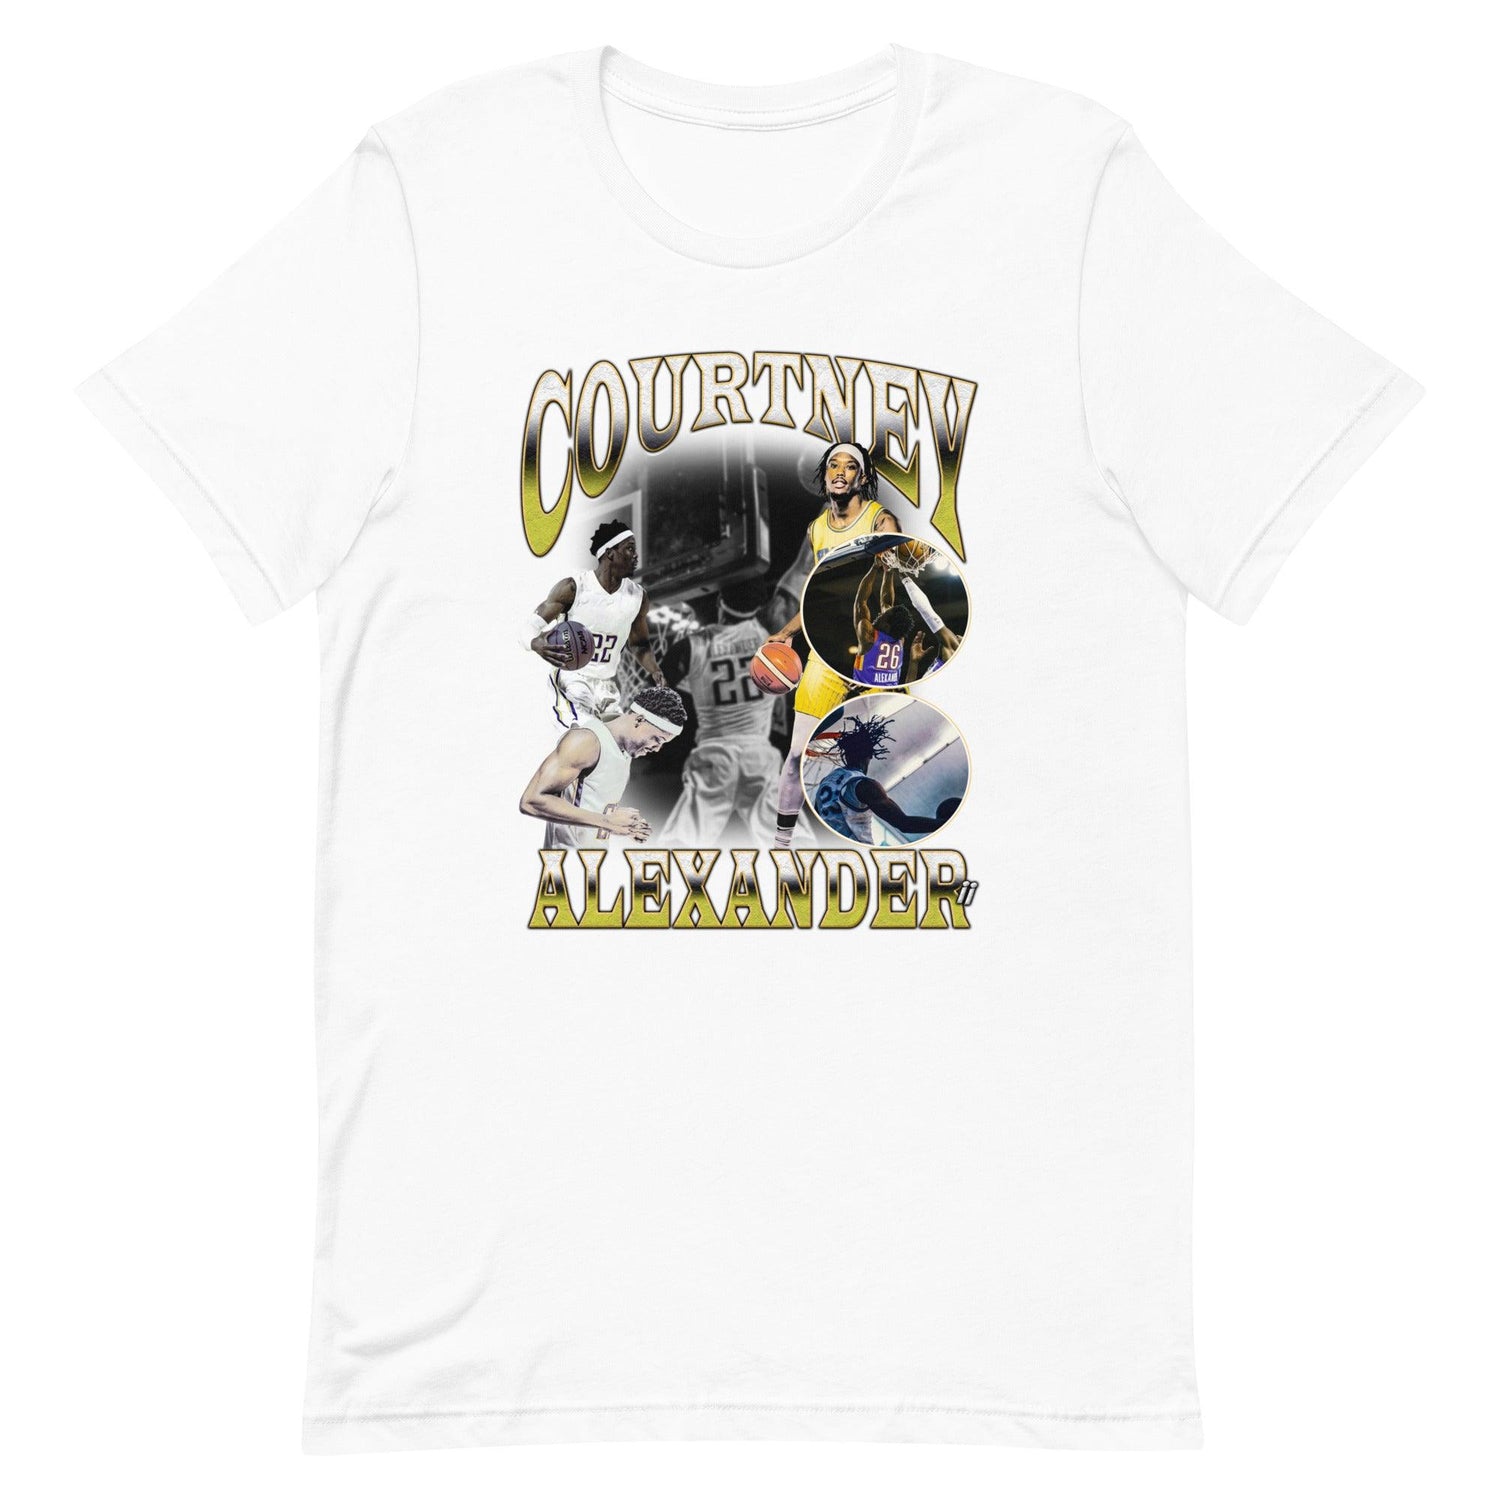 Courtney Alexander "Vintage" t-shirt - Fan Arch